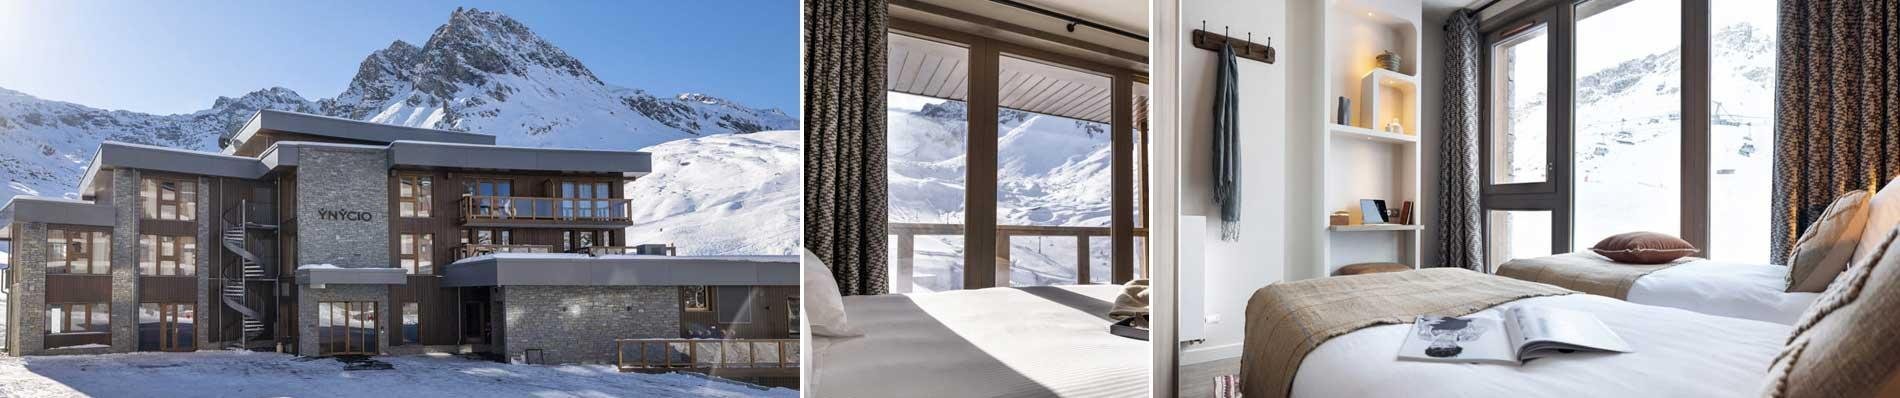 skivakantie tignes wintersport montagnettes ynycio luxe appartementen